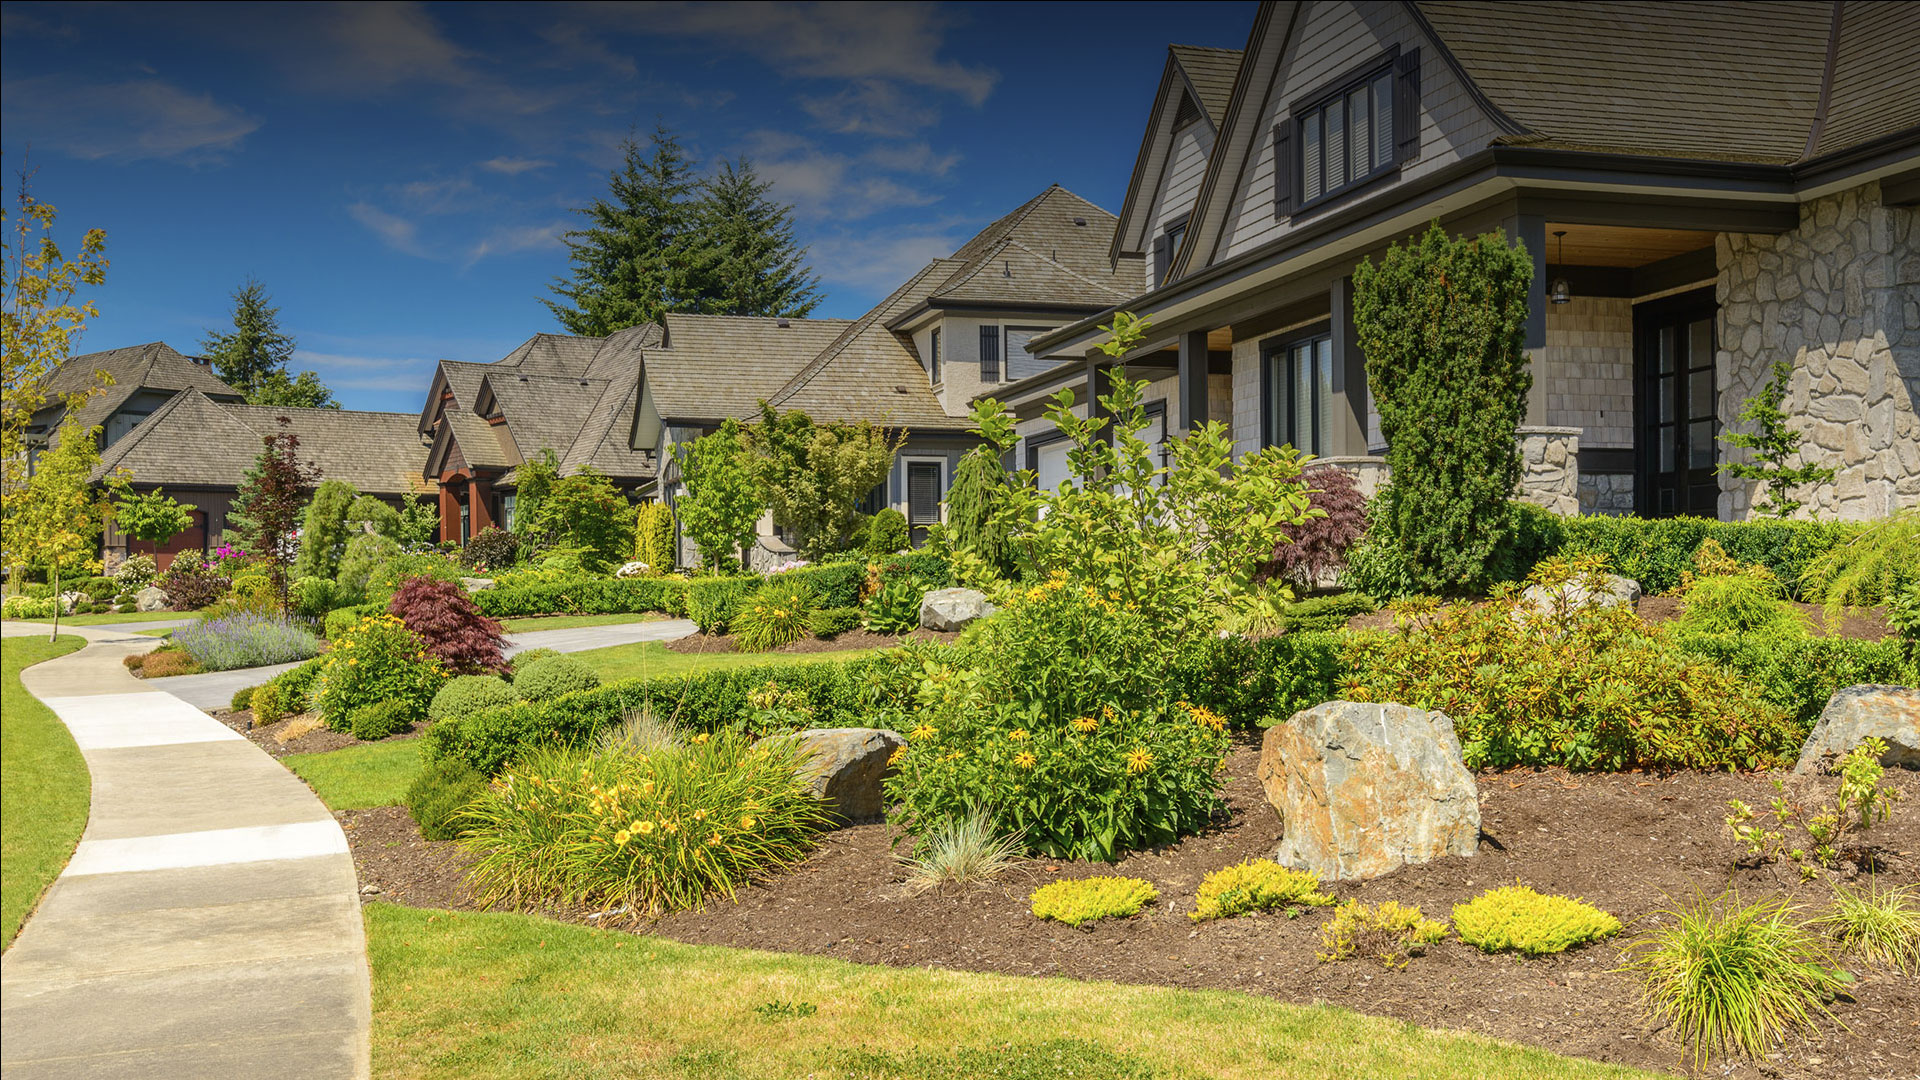 Grover Landscape & Design Paving Contractor, Landscape Design and Lawn Care Services slide 2